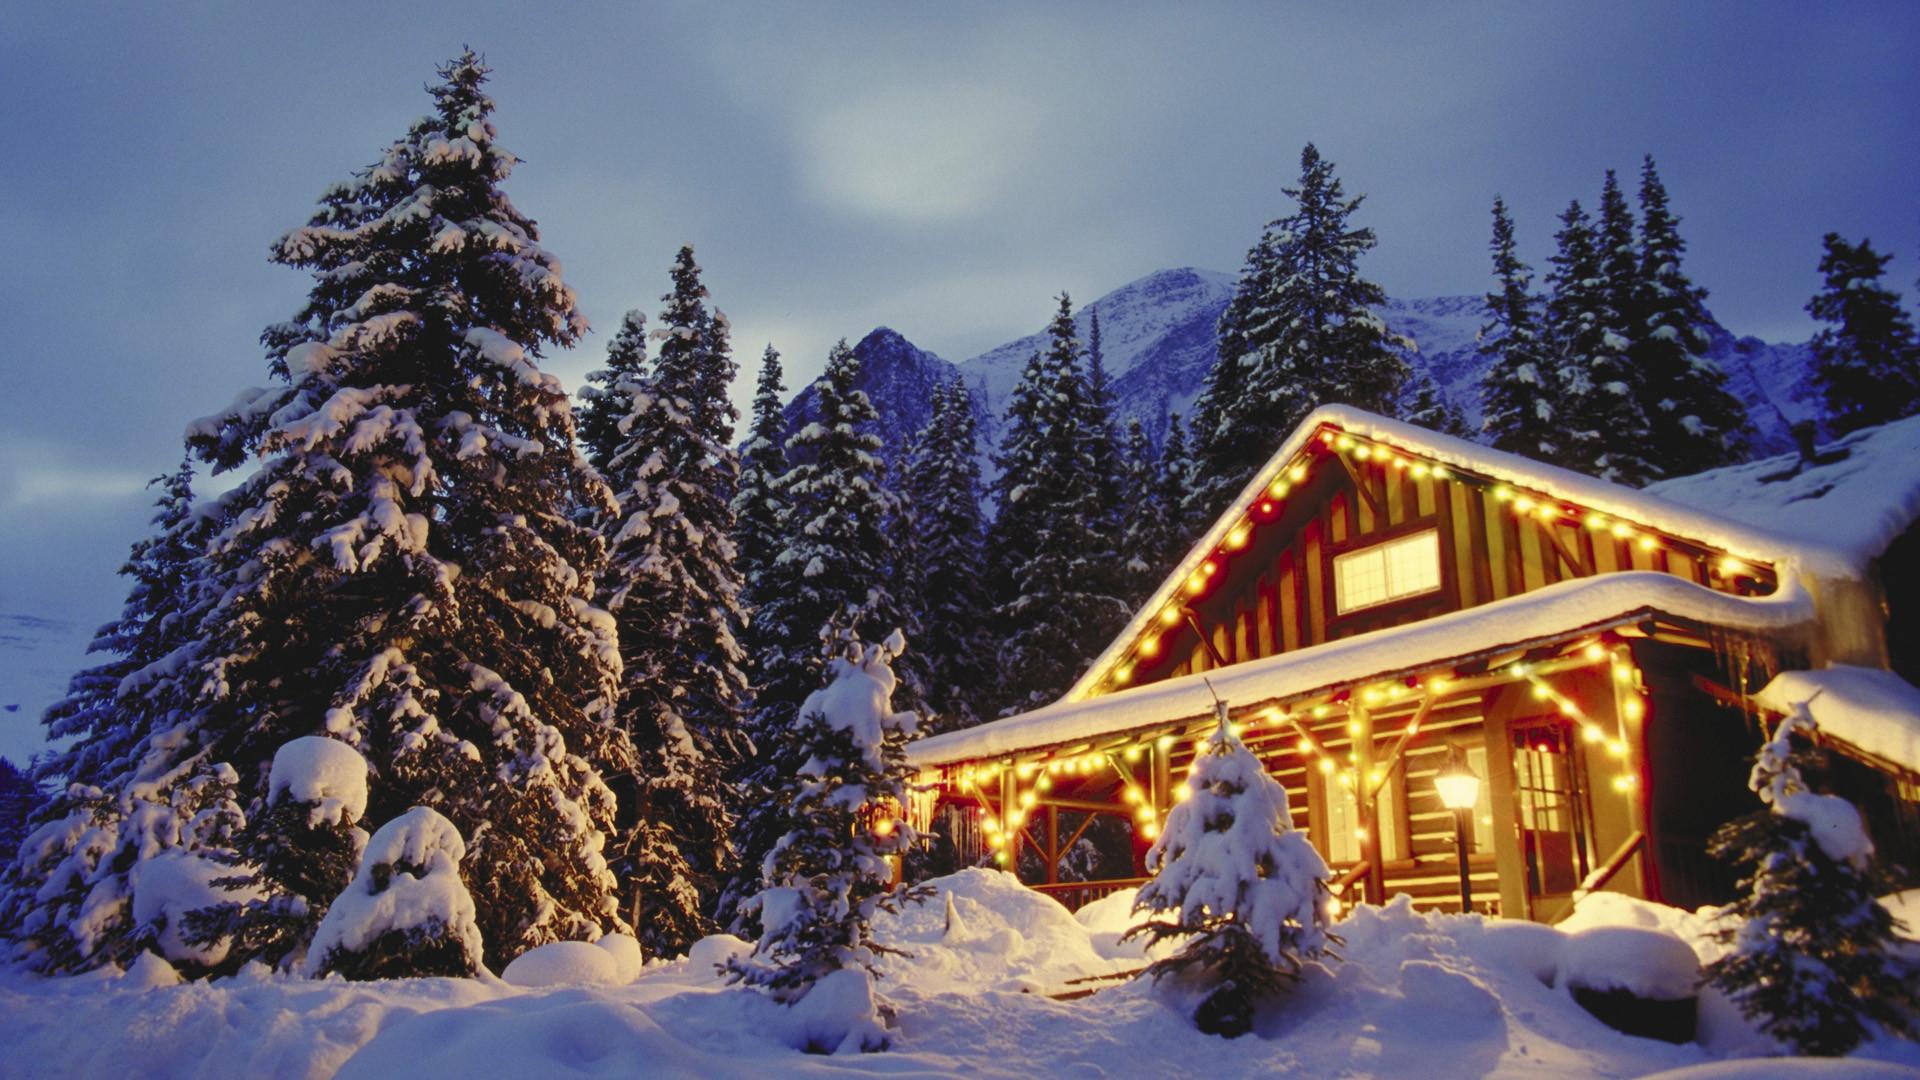 The Christmas Top by Christi Snow